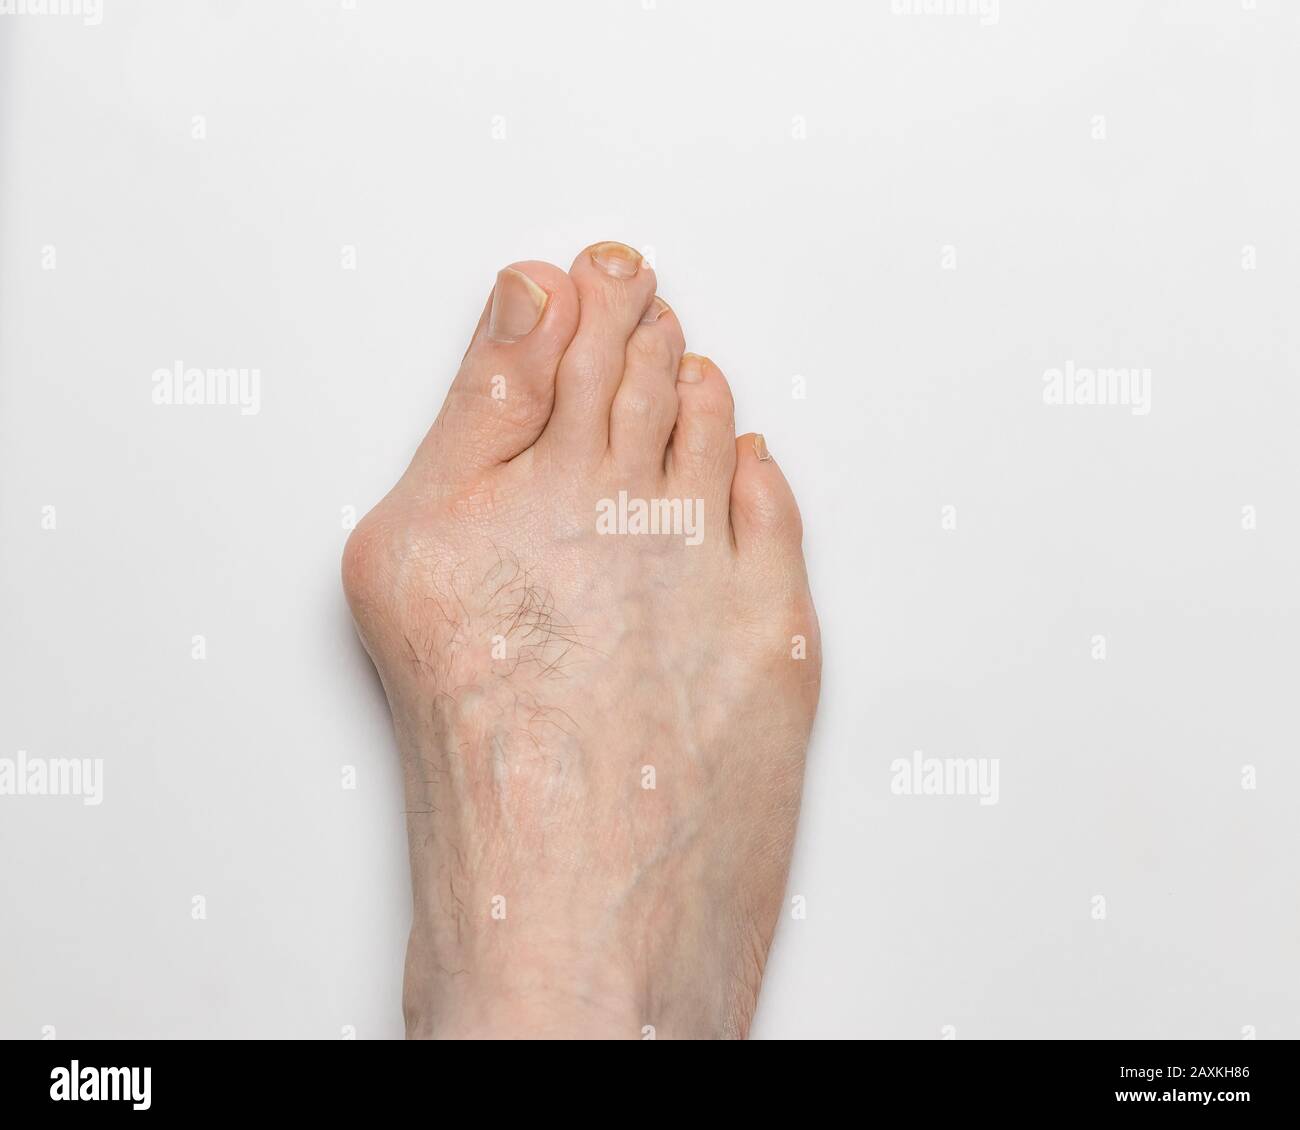 Closeup of left, right foot with bunion, hallux valgus, on big toe causing deformity Stock Photo